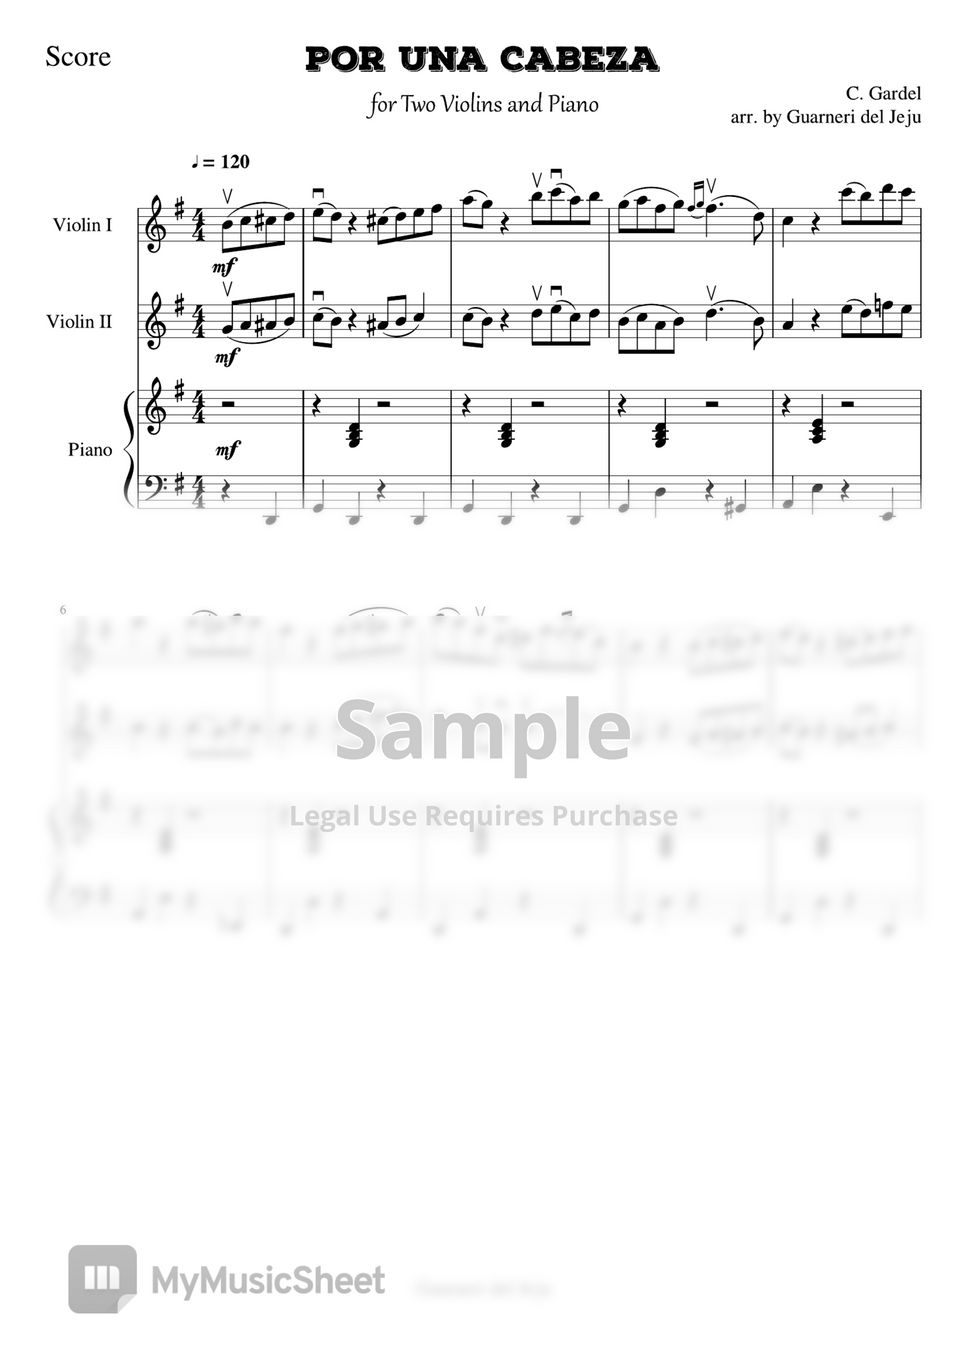 C. Gardel - Por Una Cabeza for 2 Violins and Piano by Guarneri del Jeju